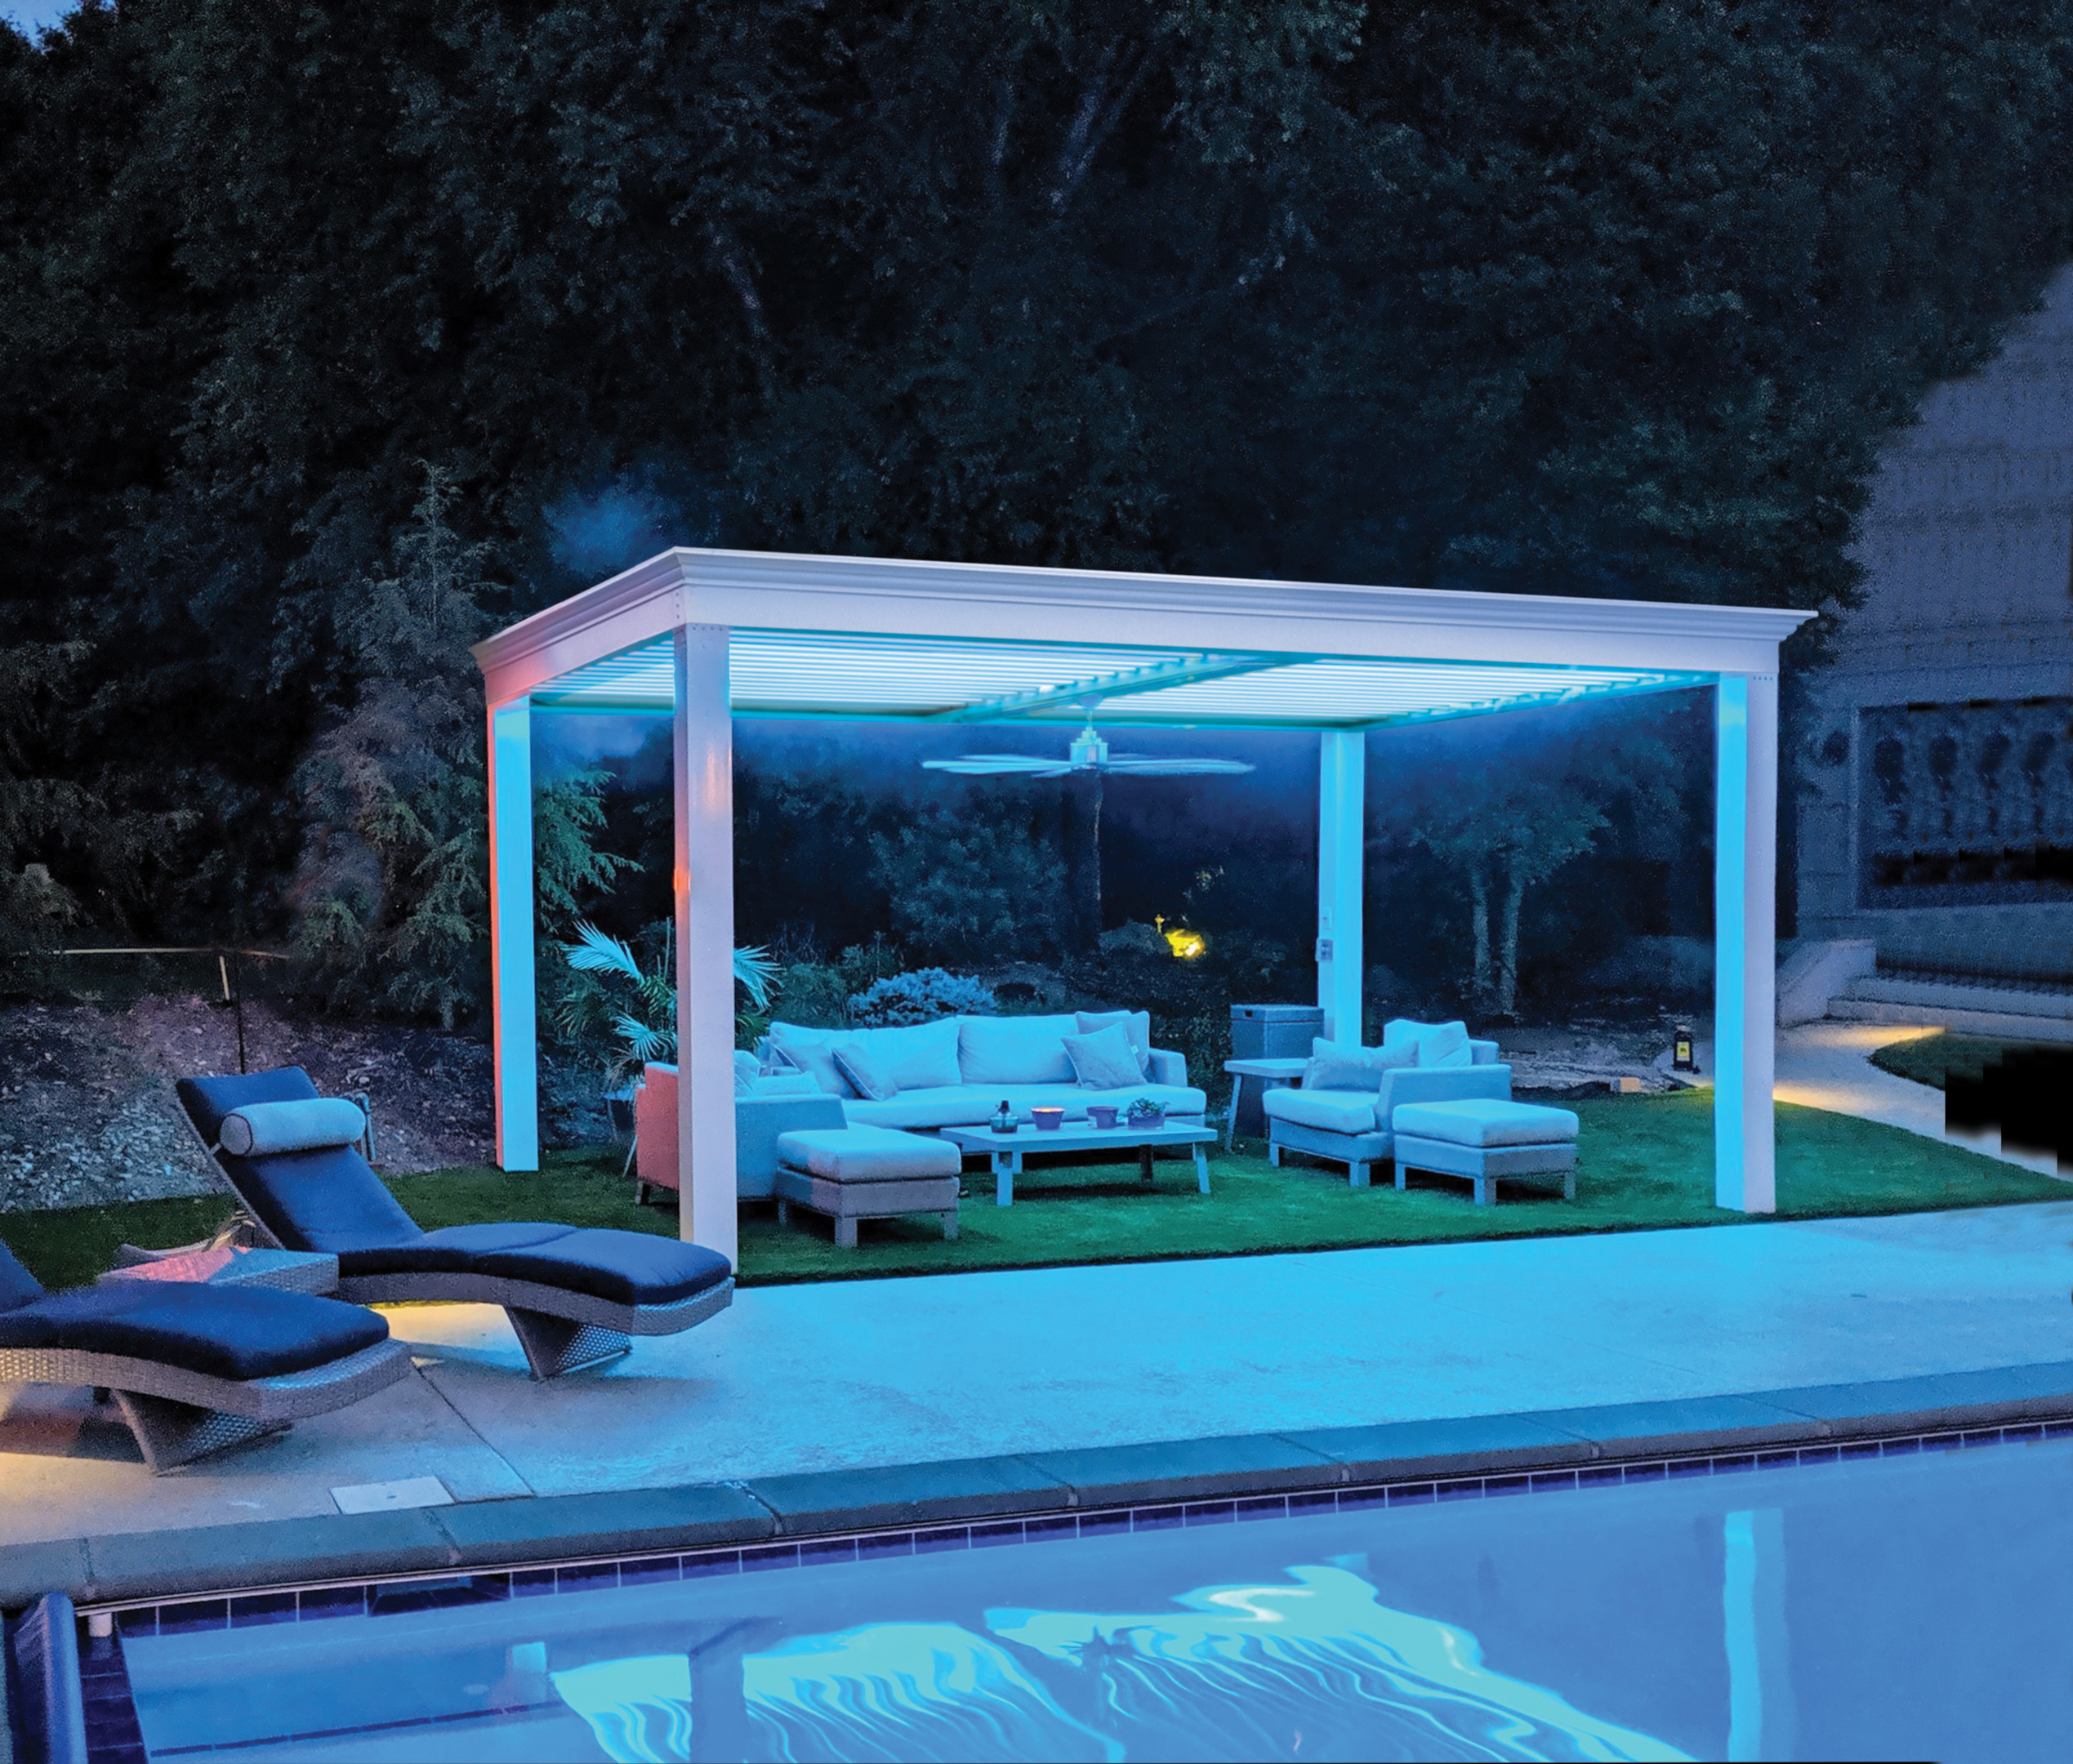 Pergola around pool created an outdoor room. 